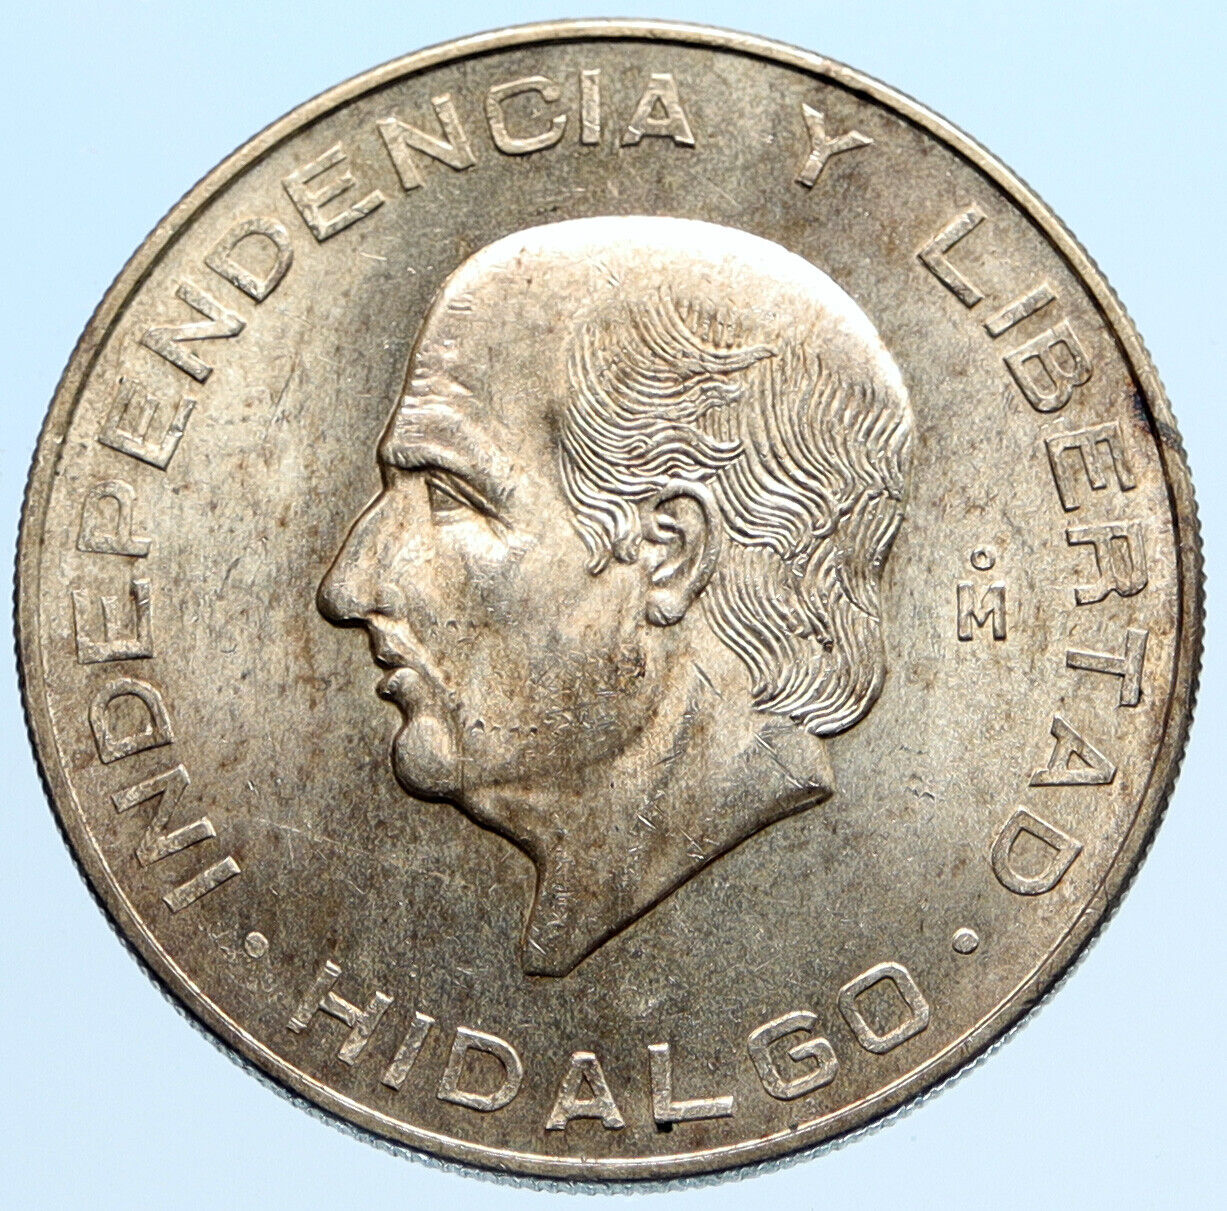 1956 MEXICO Large SILVER 10 Pesos Coin MEXICAN Independence HERO Hidalgo i96892